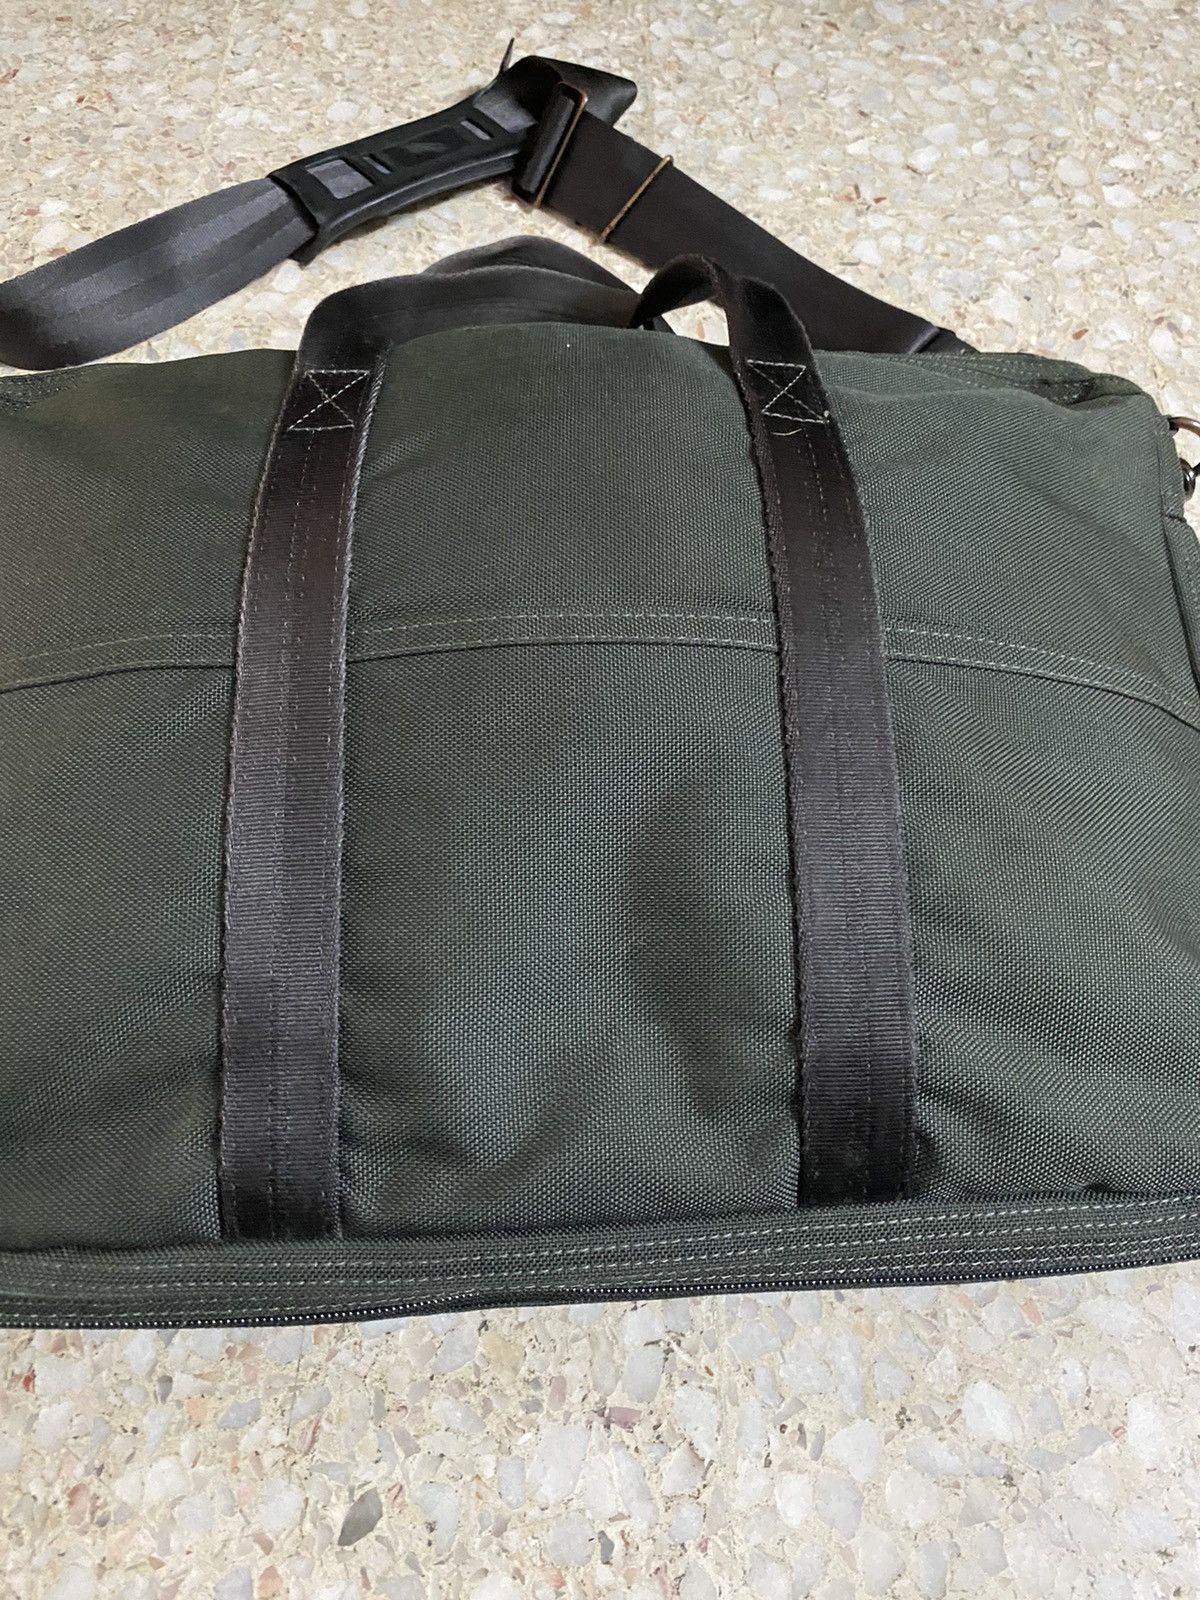 Porter Cordura Messenger Bag Green Army Made in Japan - 11